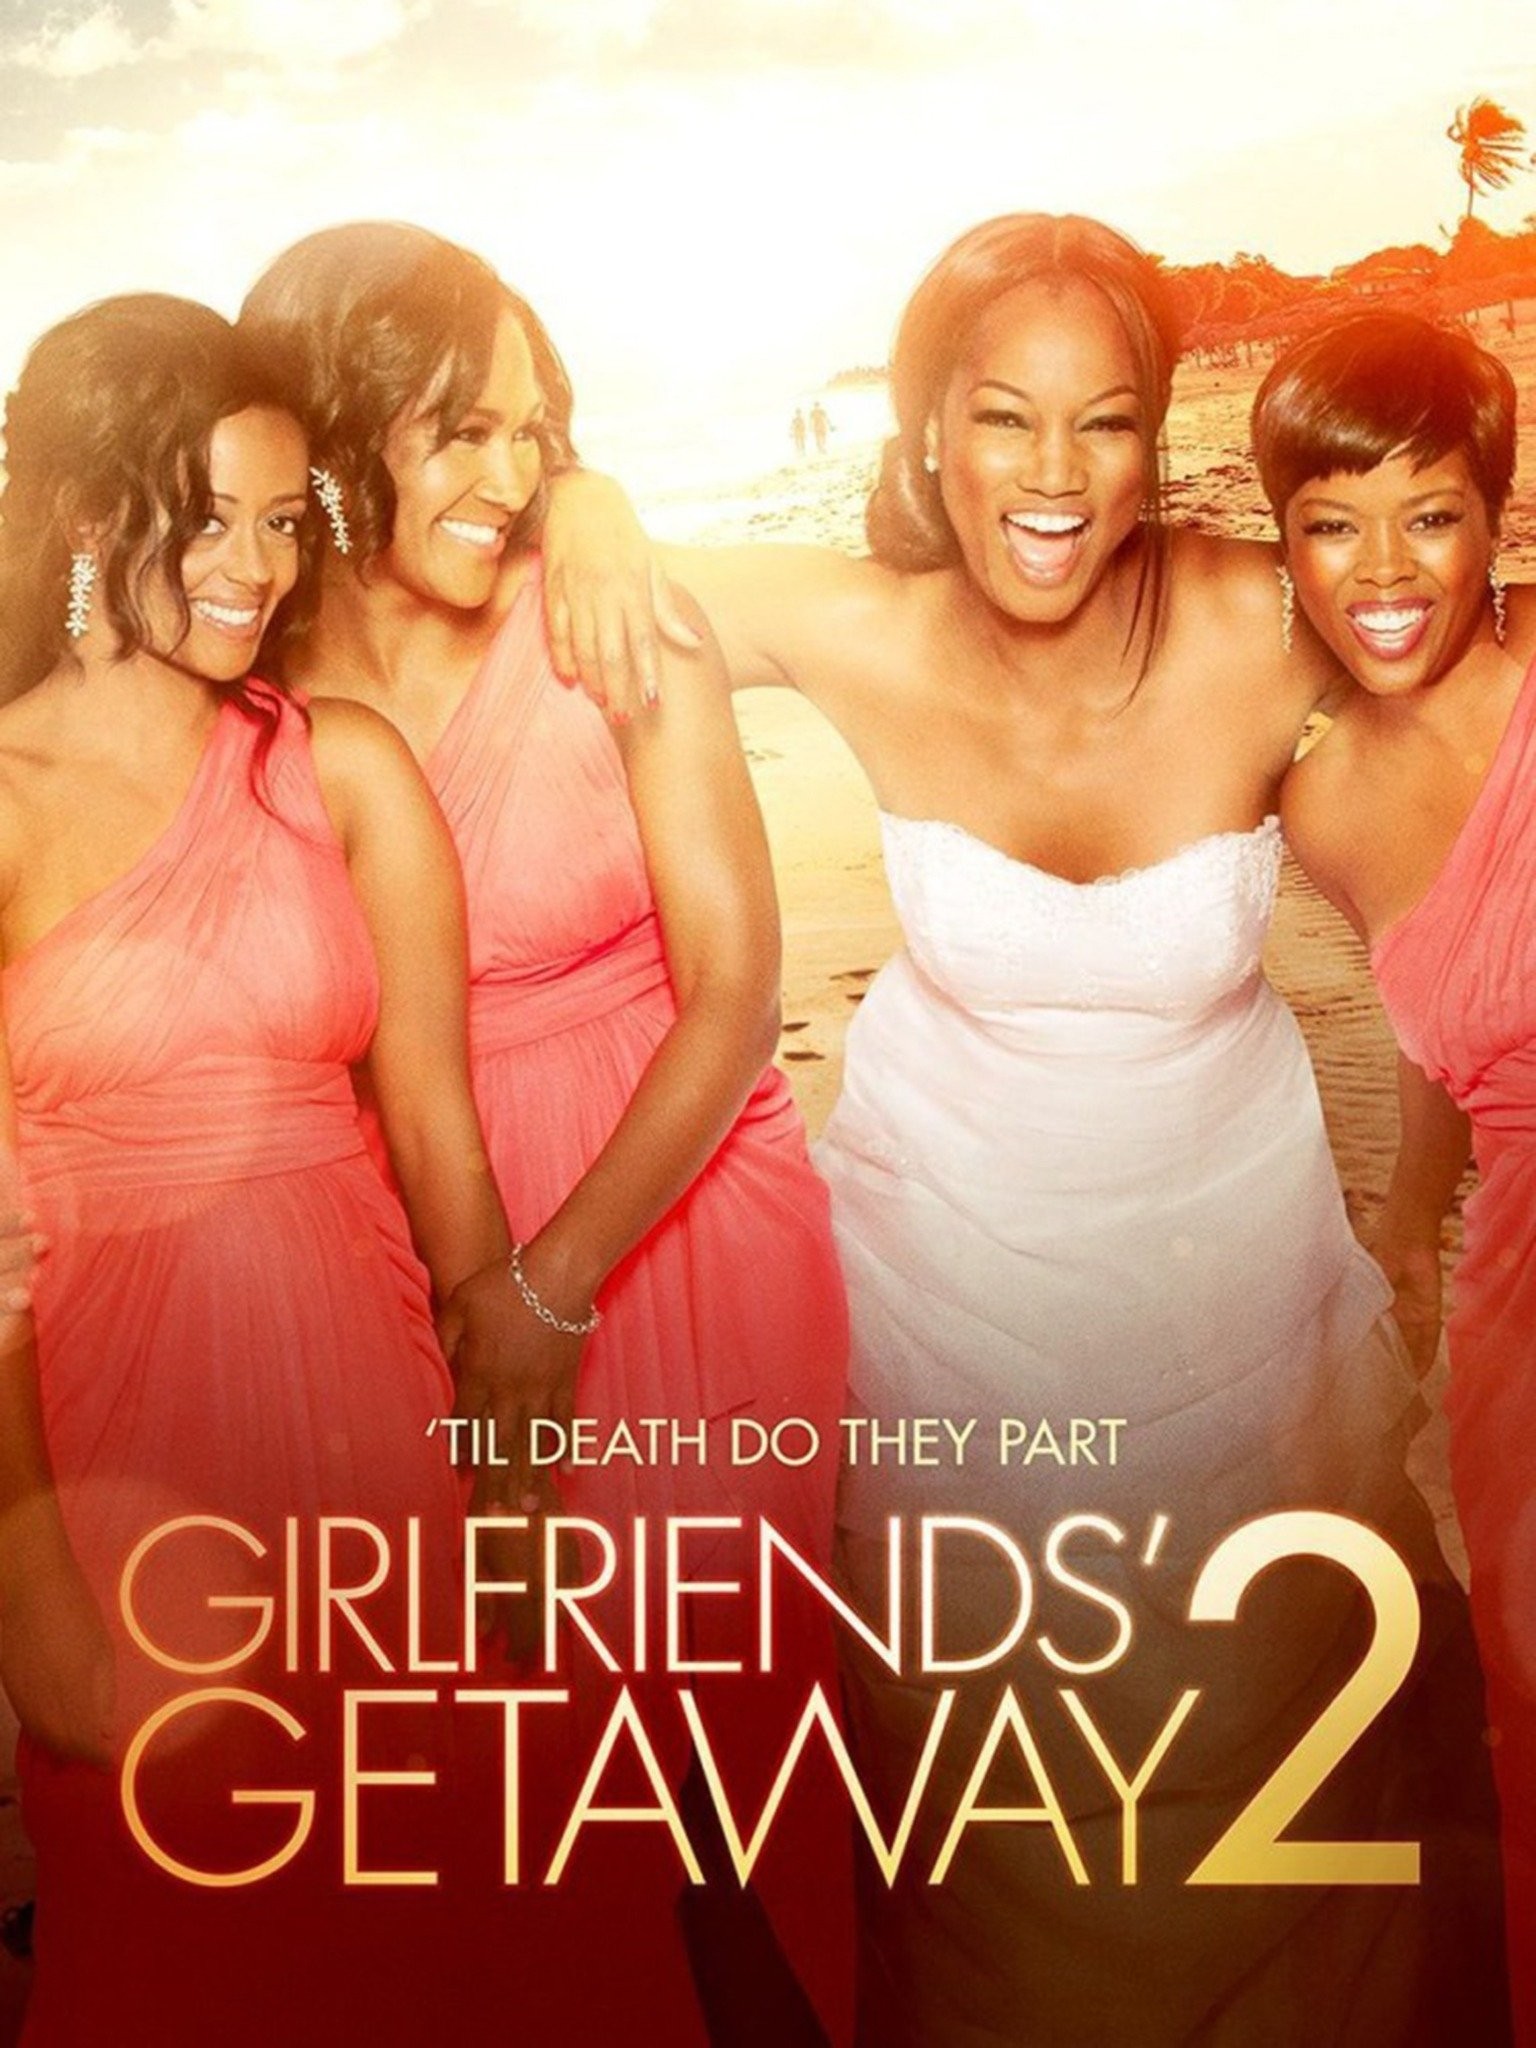 Girlfriends Getaway 2 (TV Movie 2015) - IMDb